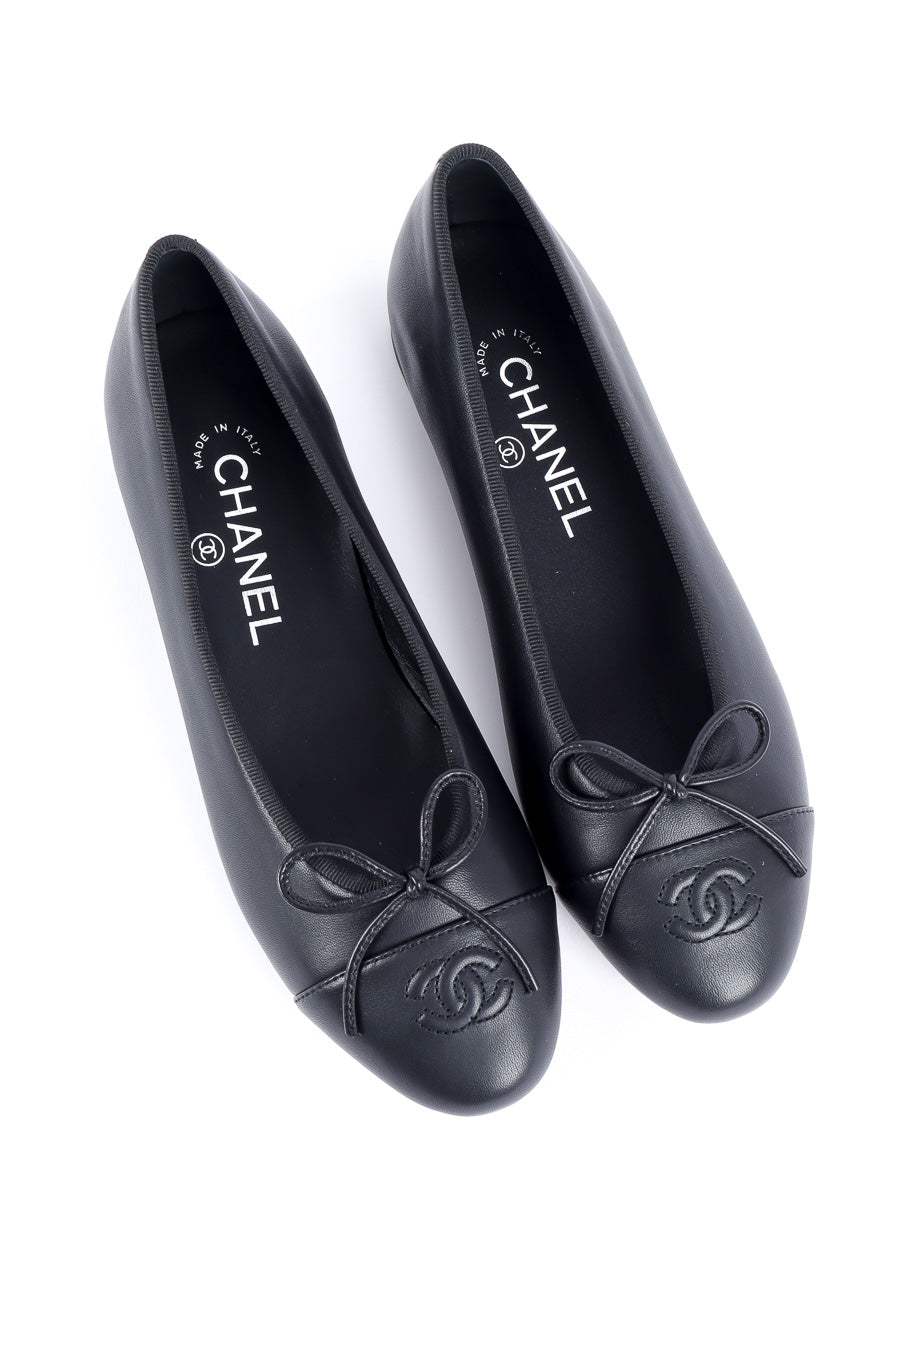 Chanel Beige Leather CC Logo Ballet Flats Size 36 Chanel